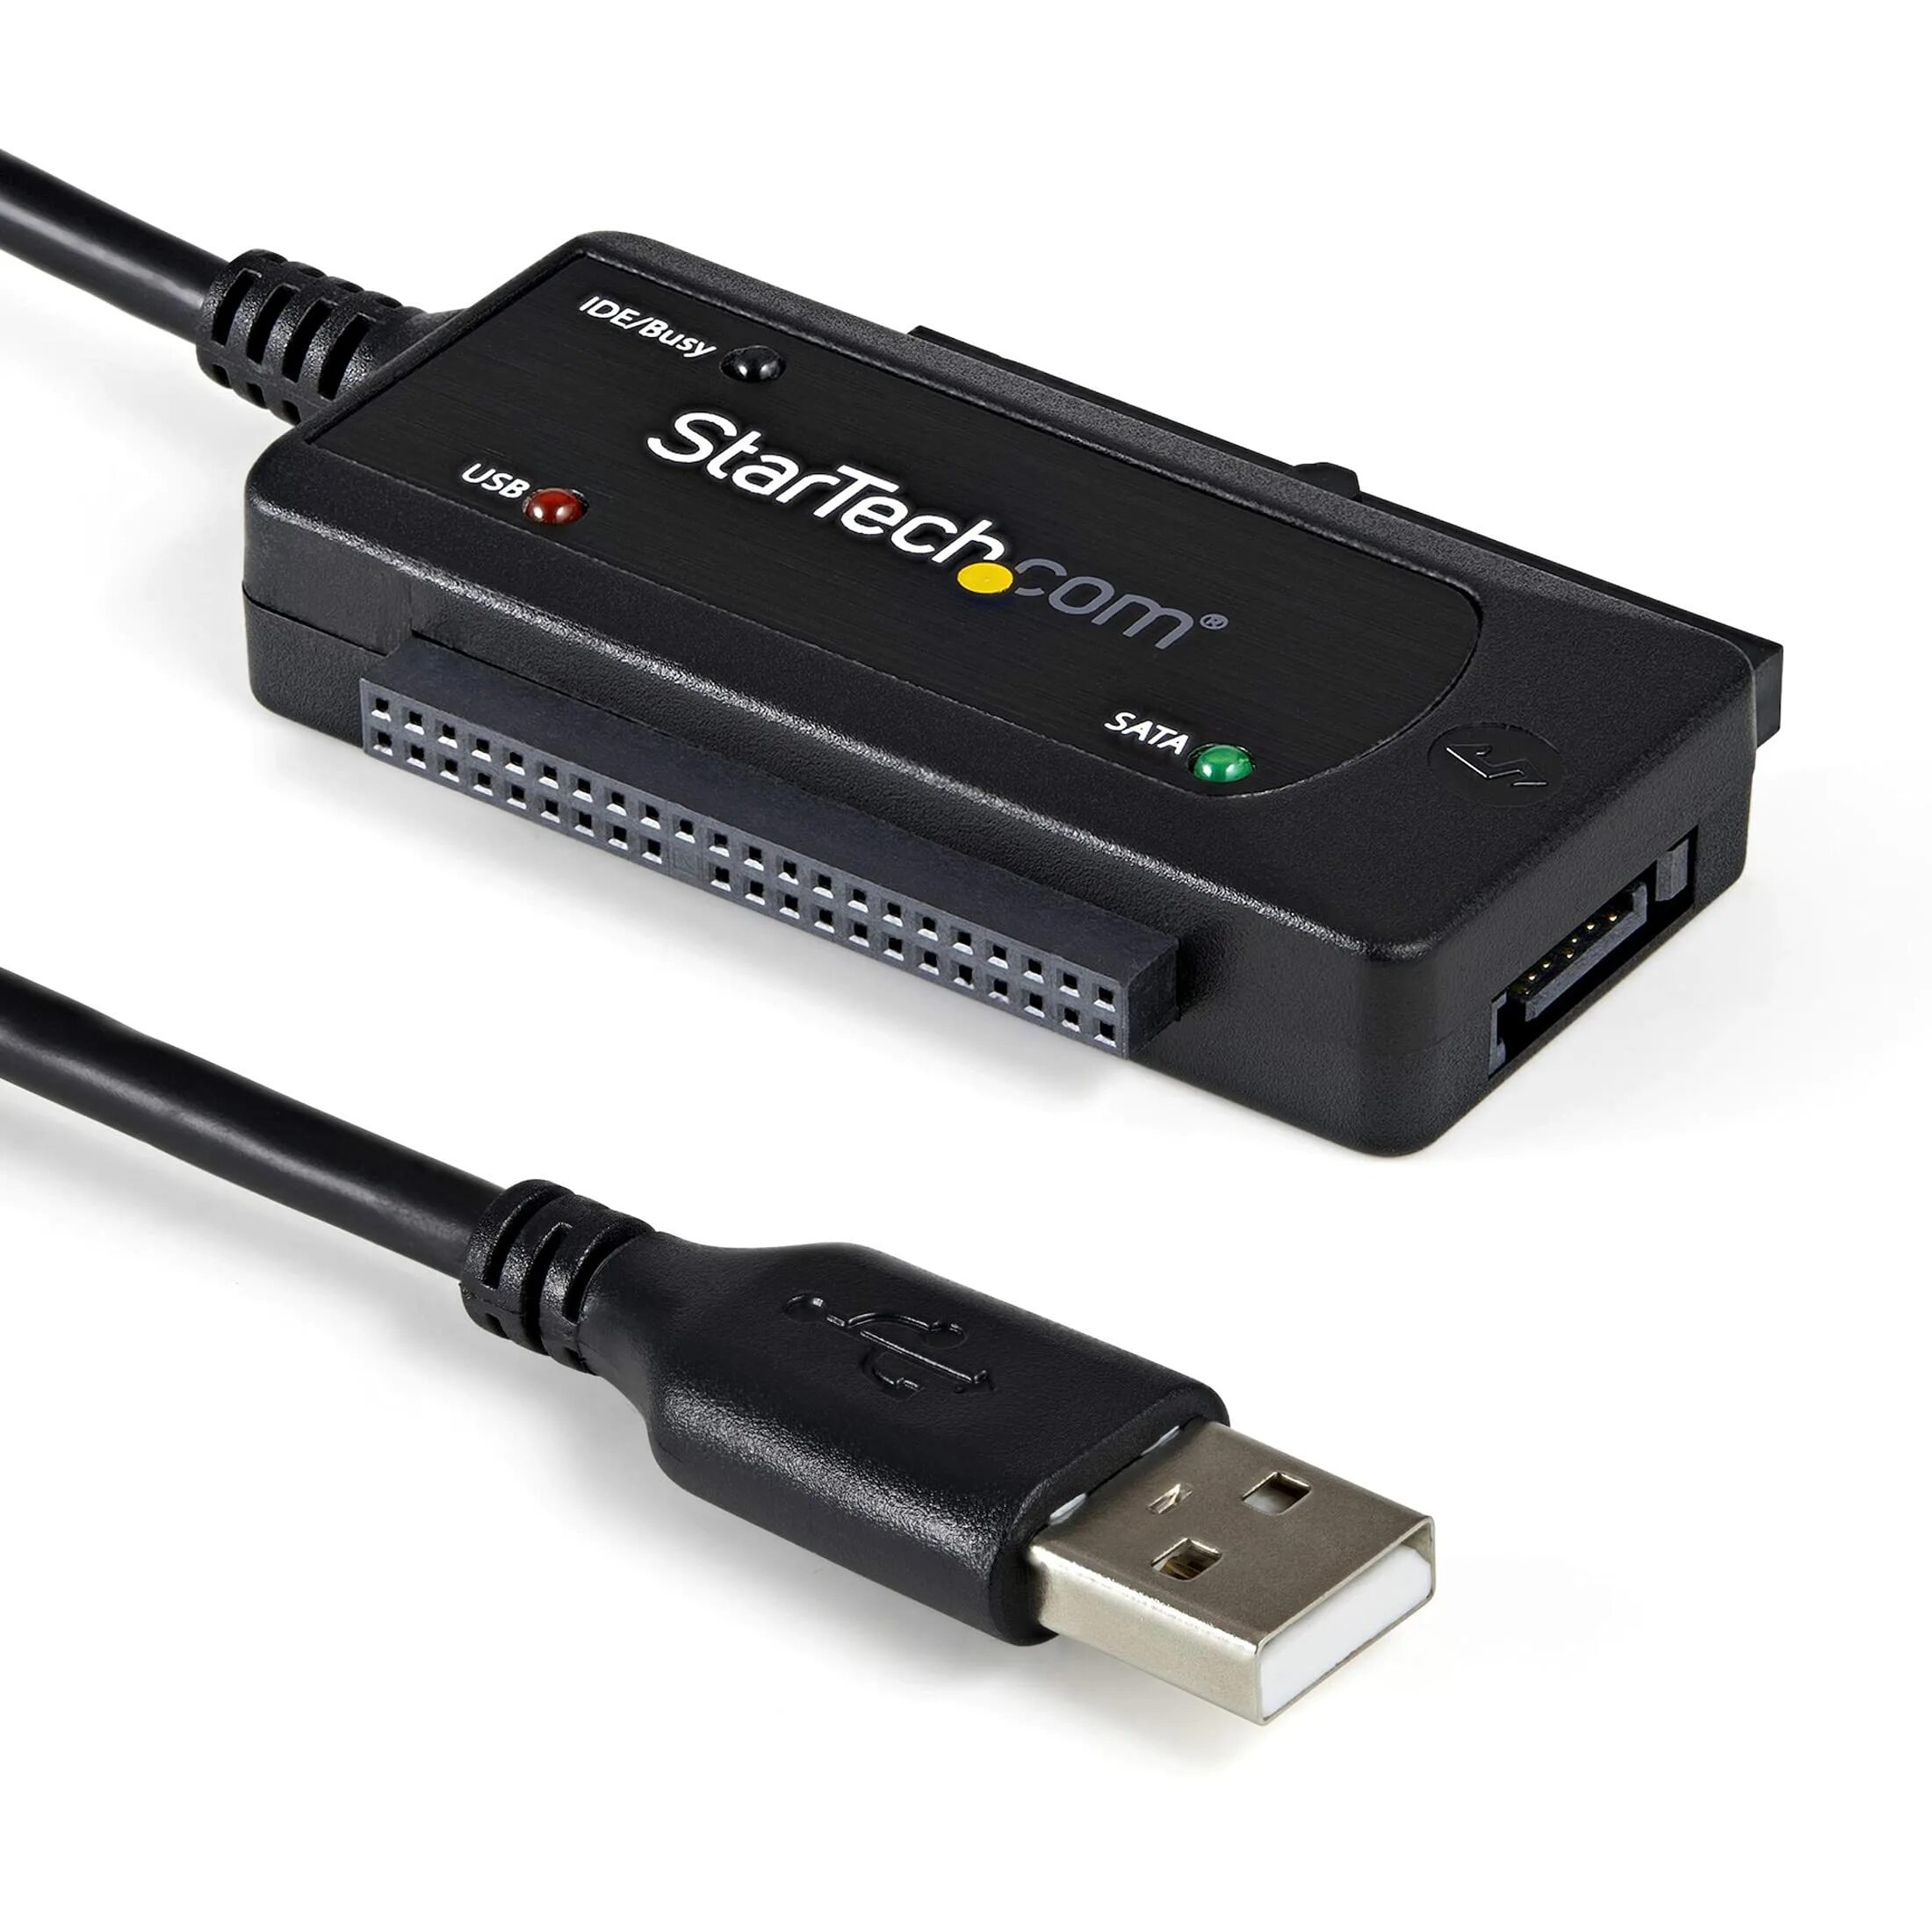 Купить адаптер для жесткого. USB 2.0 to SATA/ide Cable. Ide to USB переходник. Ide SATA to USB. Ide SATA USB переходник.